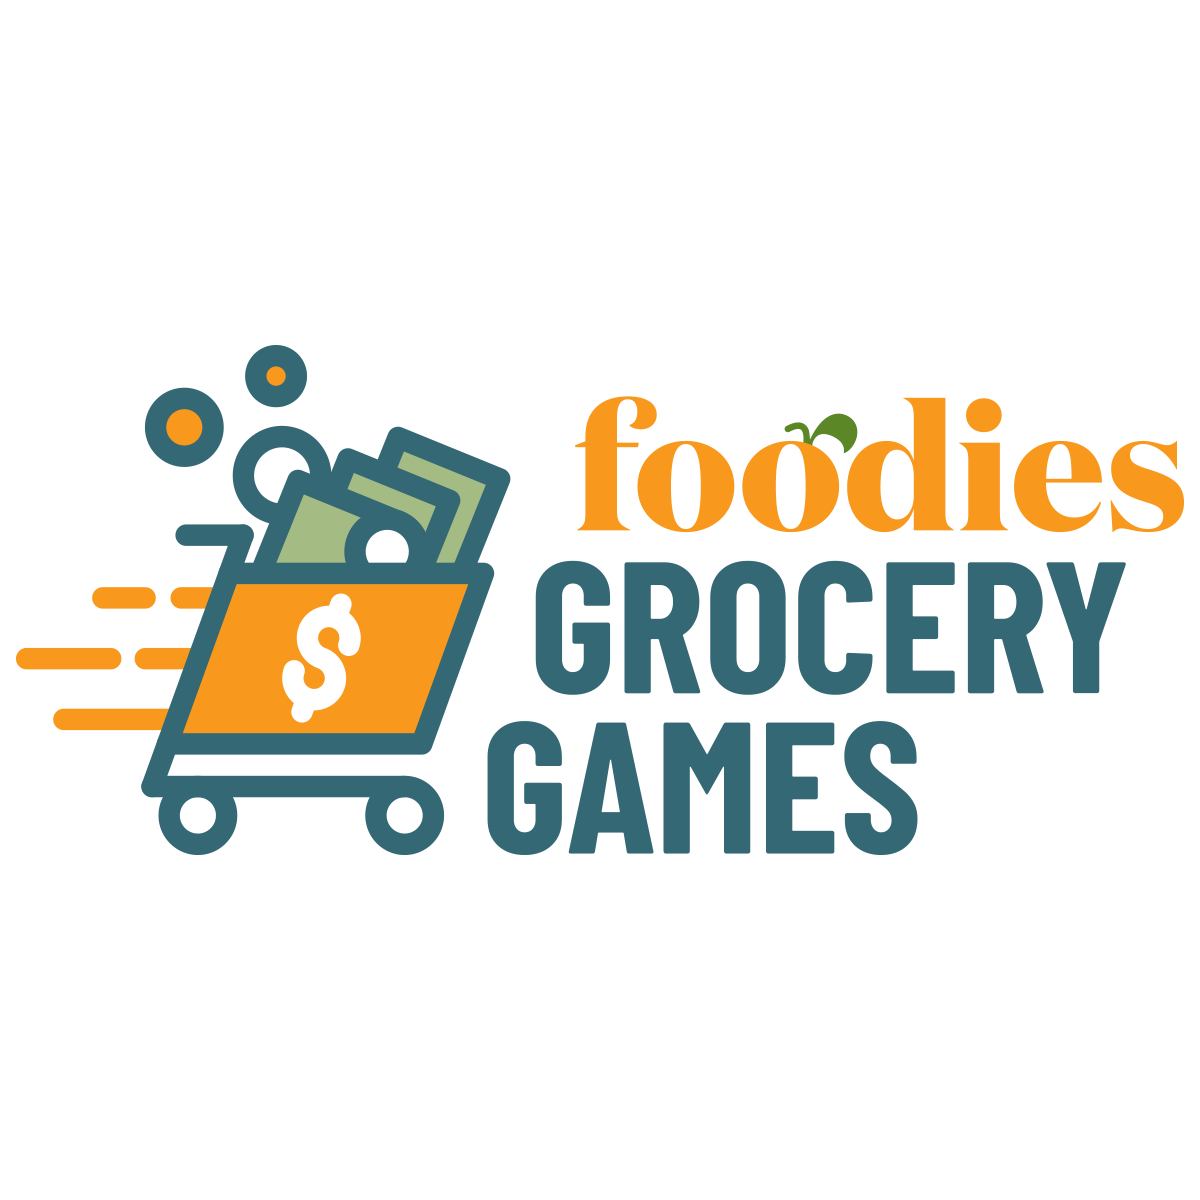 Foodies Grocery Games logo